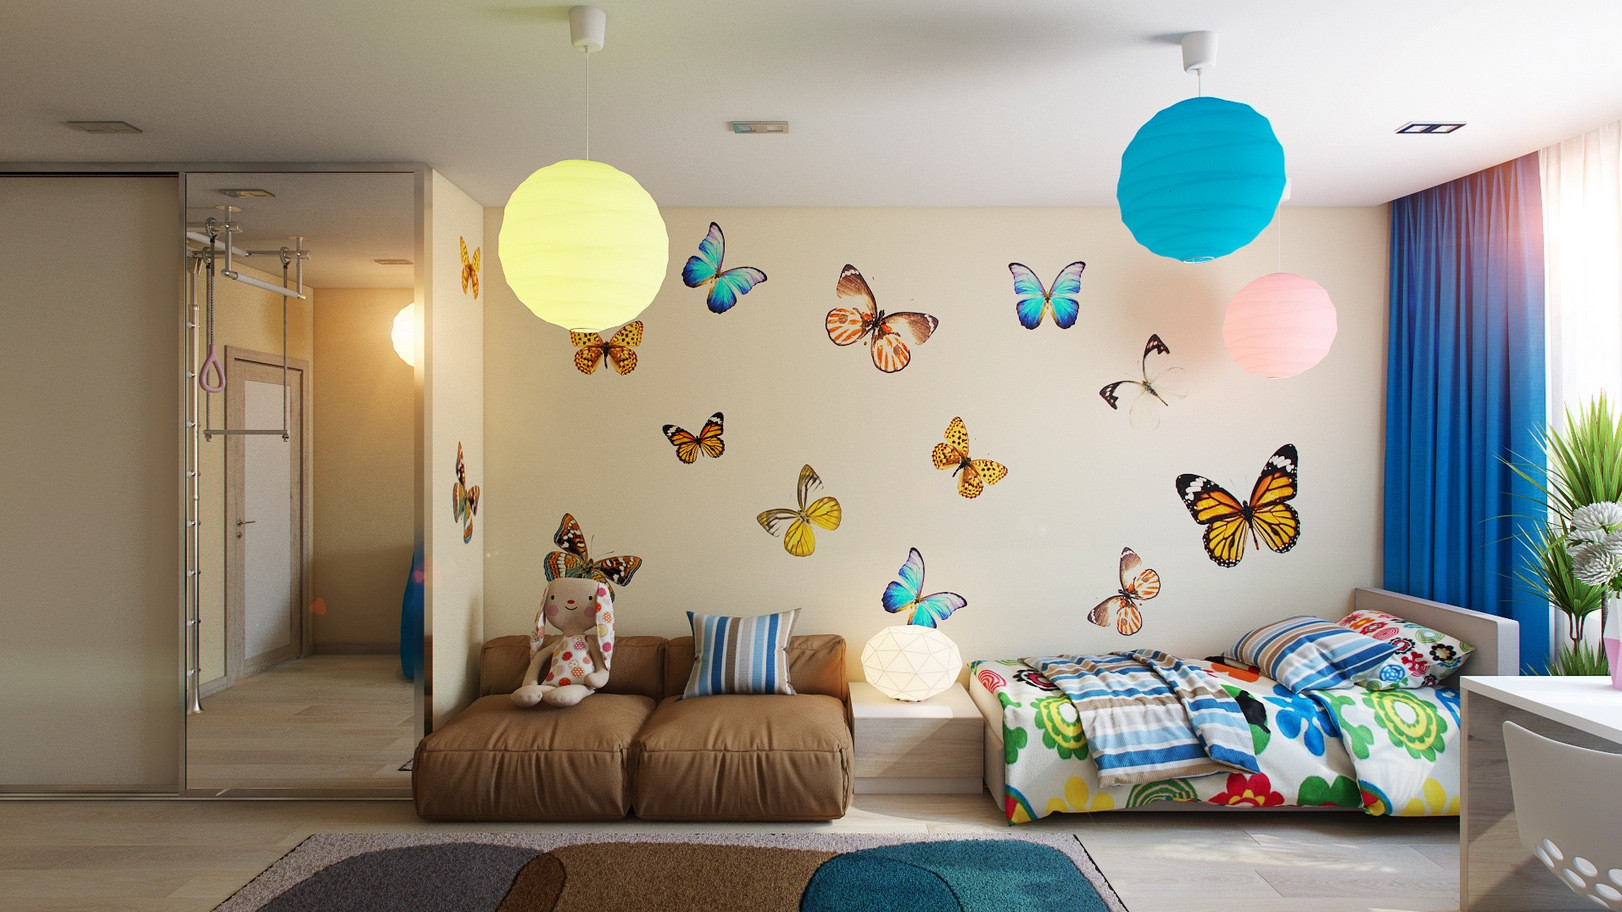 Butterfly Kids Room
 Casting Color Over Kids Rooms